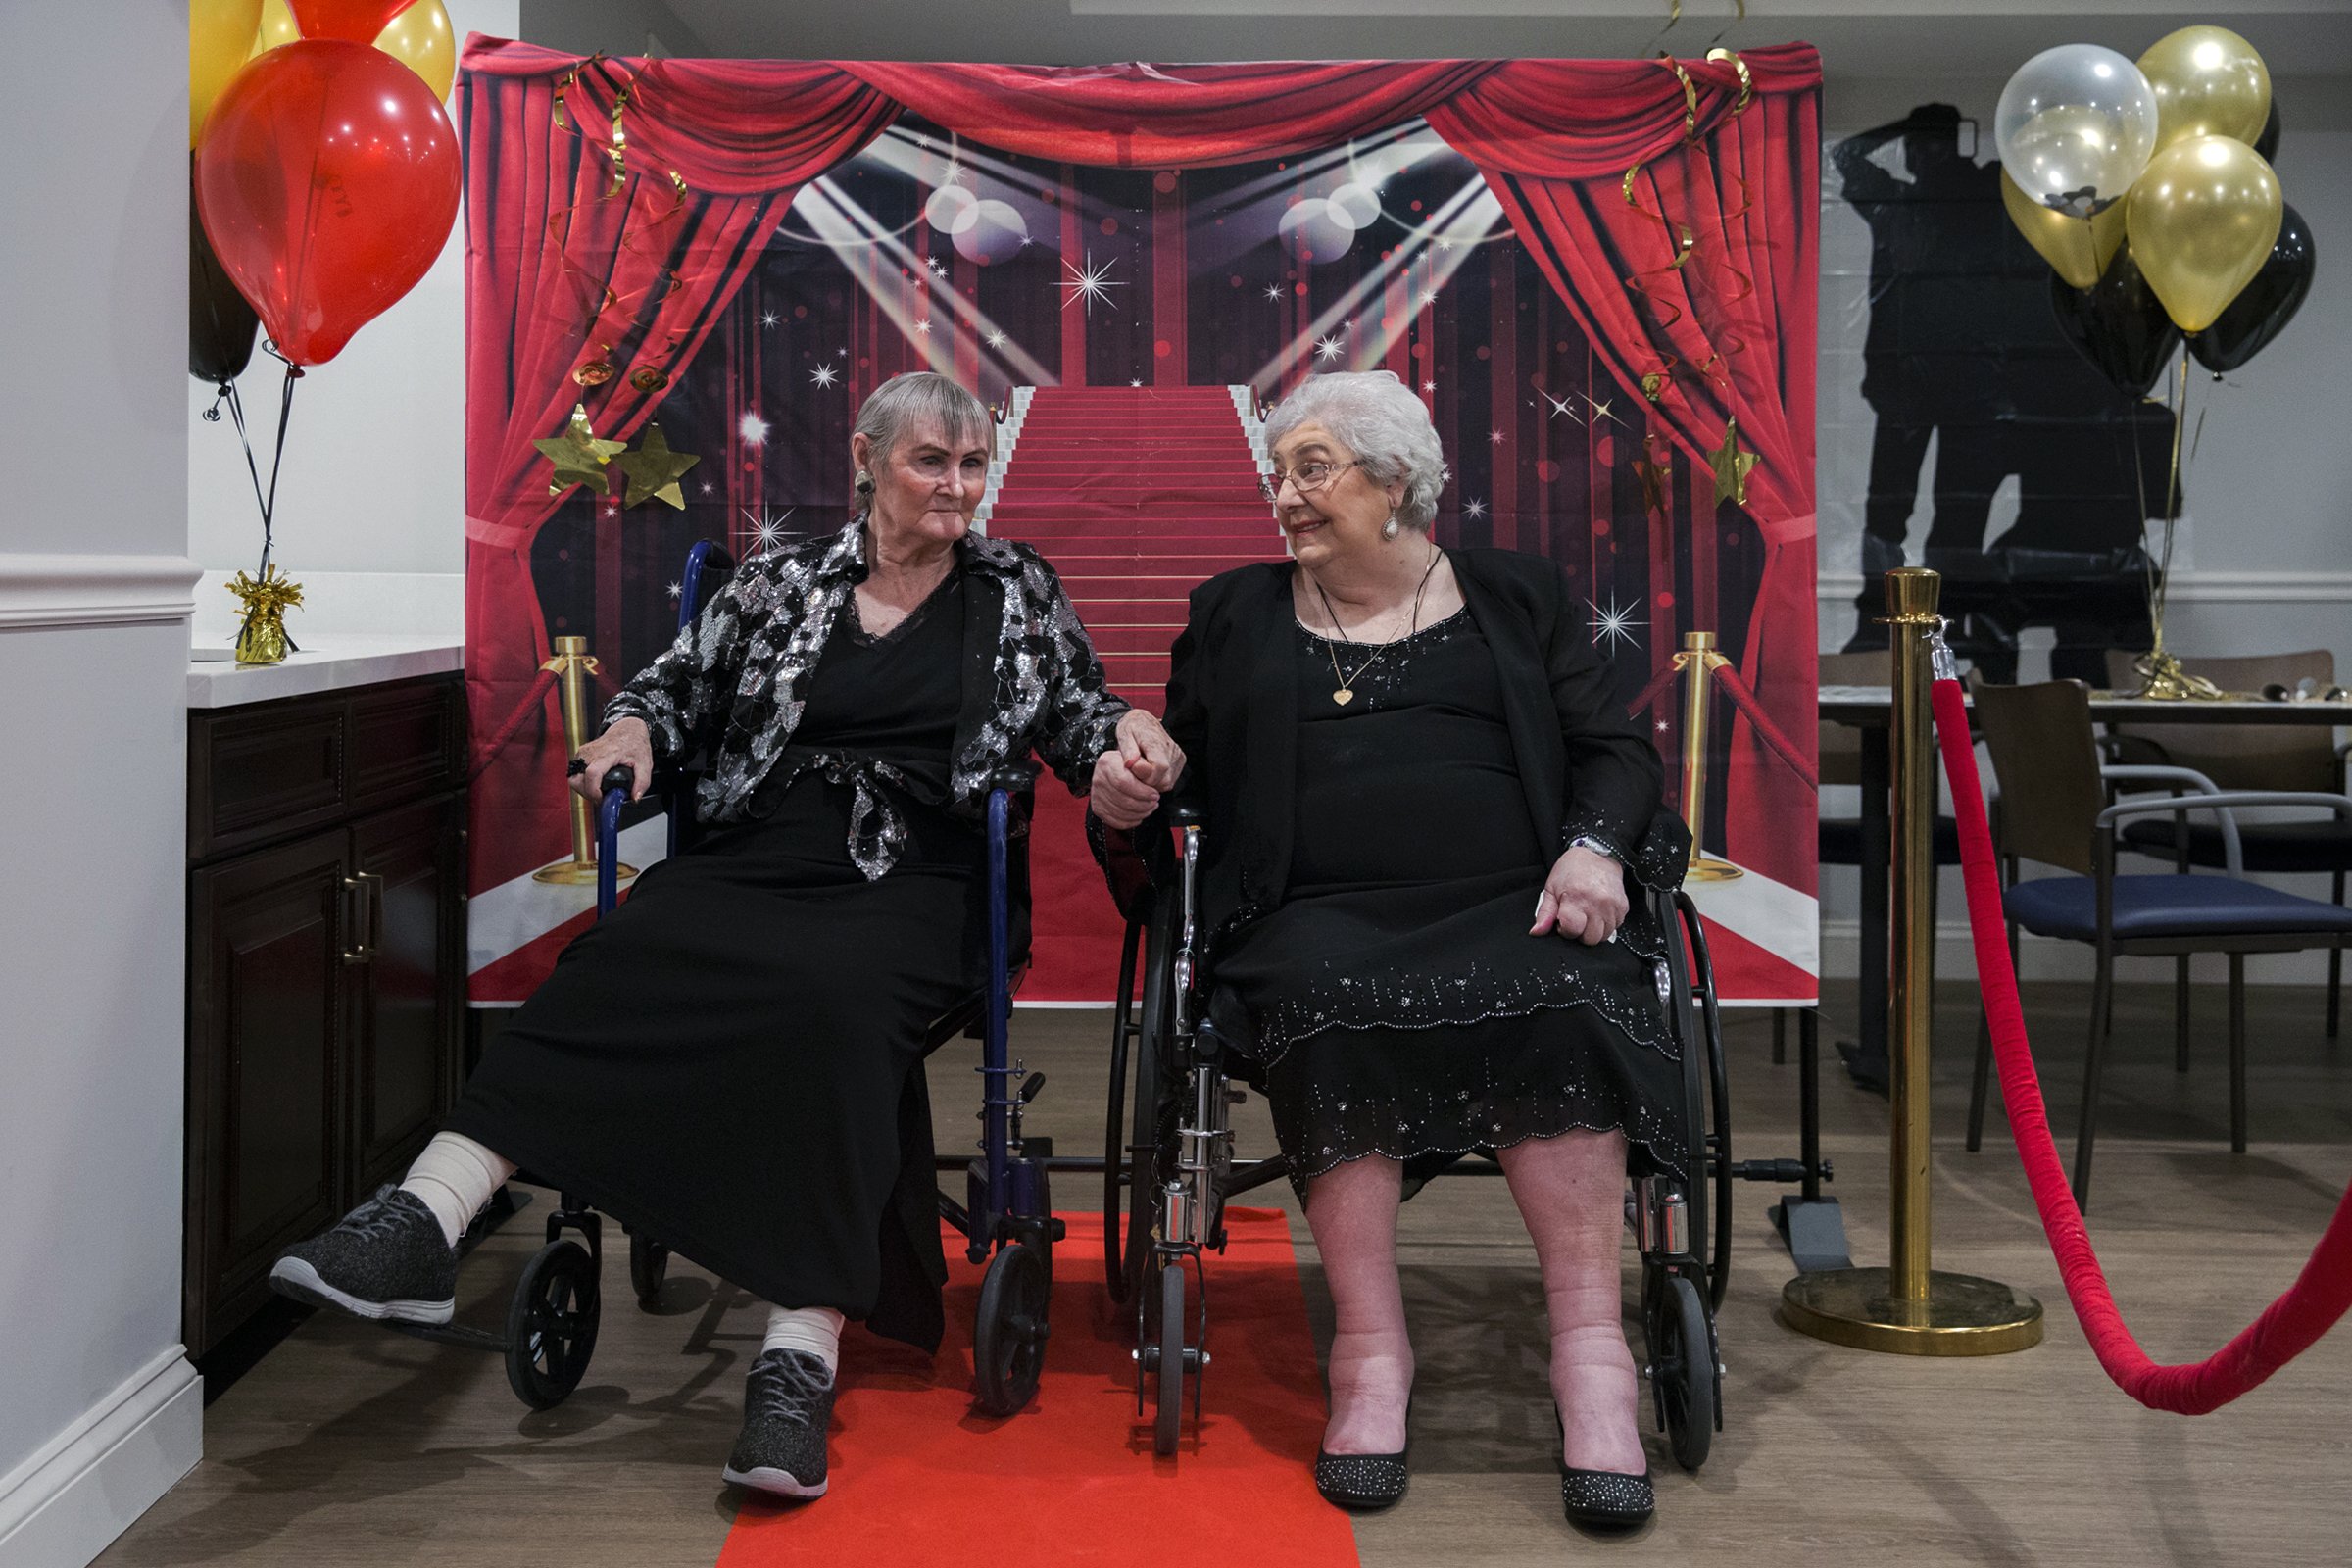    Georgina and Mary attend the Senior Prom on November 21, 2019.&nbsp; 